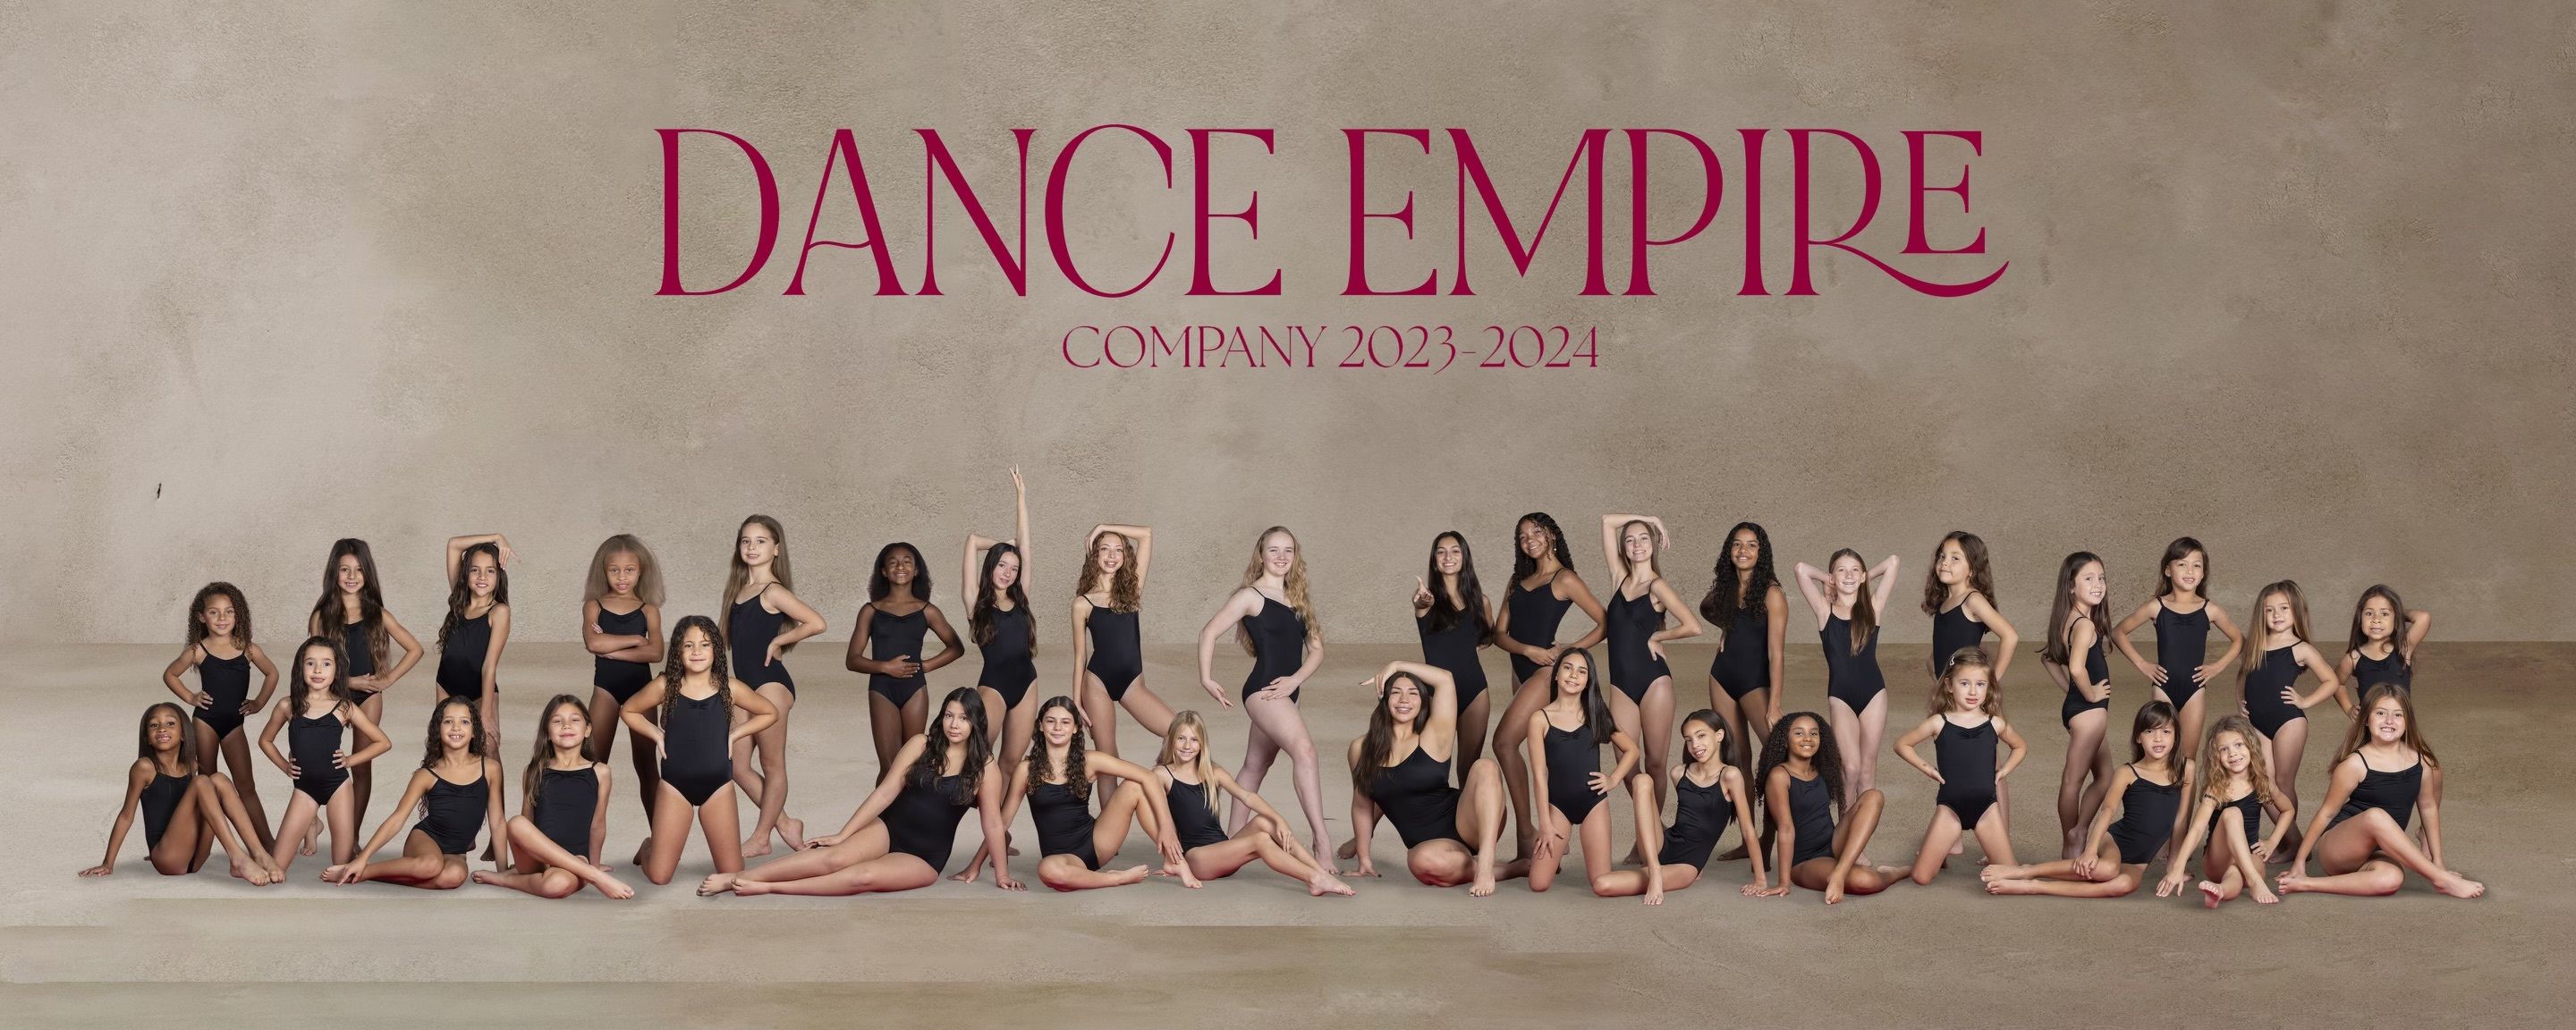 2023-2024 DANCE EMPIRE COMPANY COMPOSITE.jpg